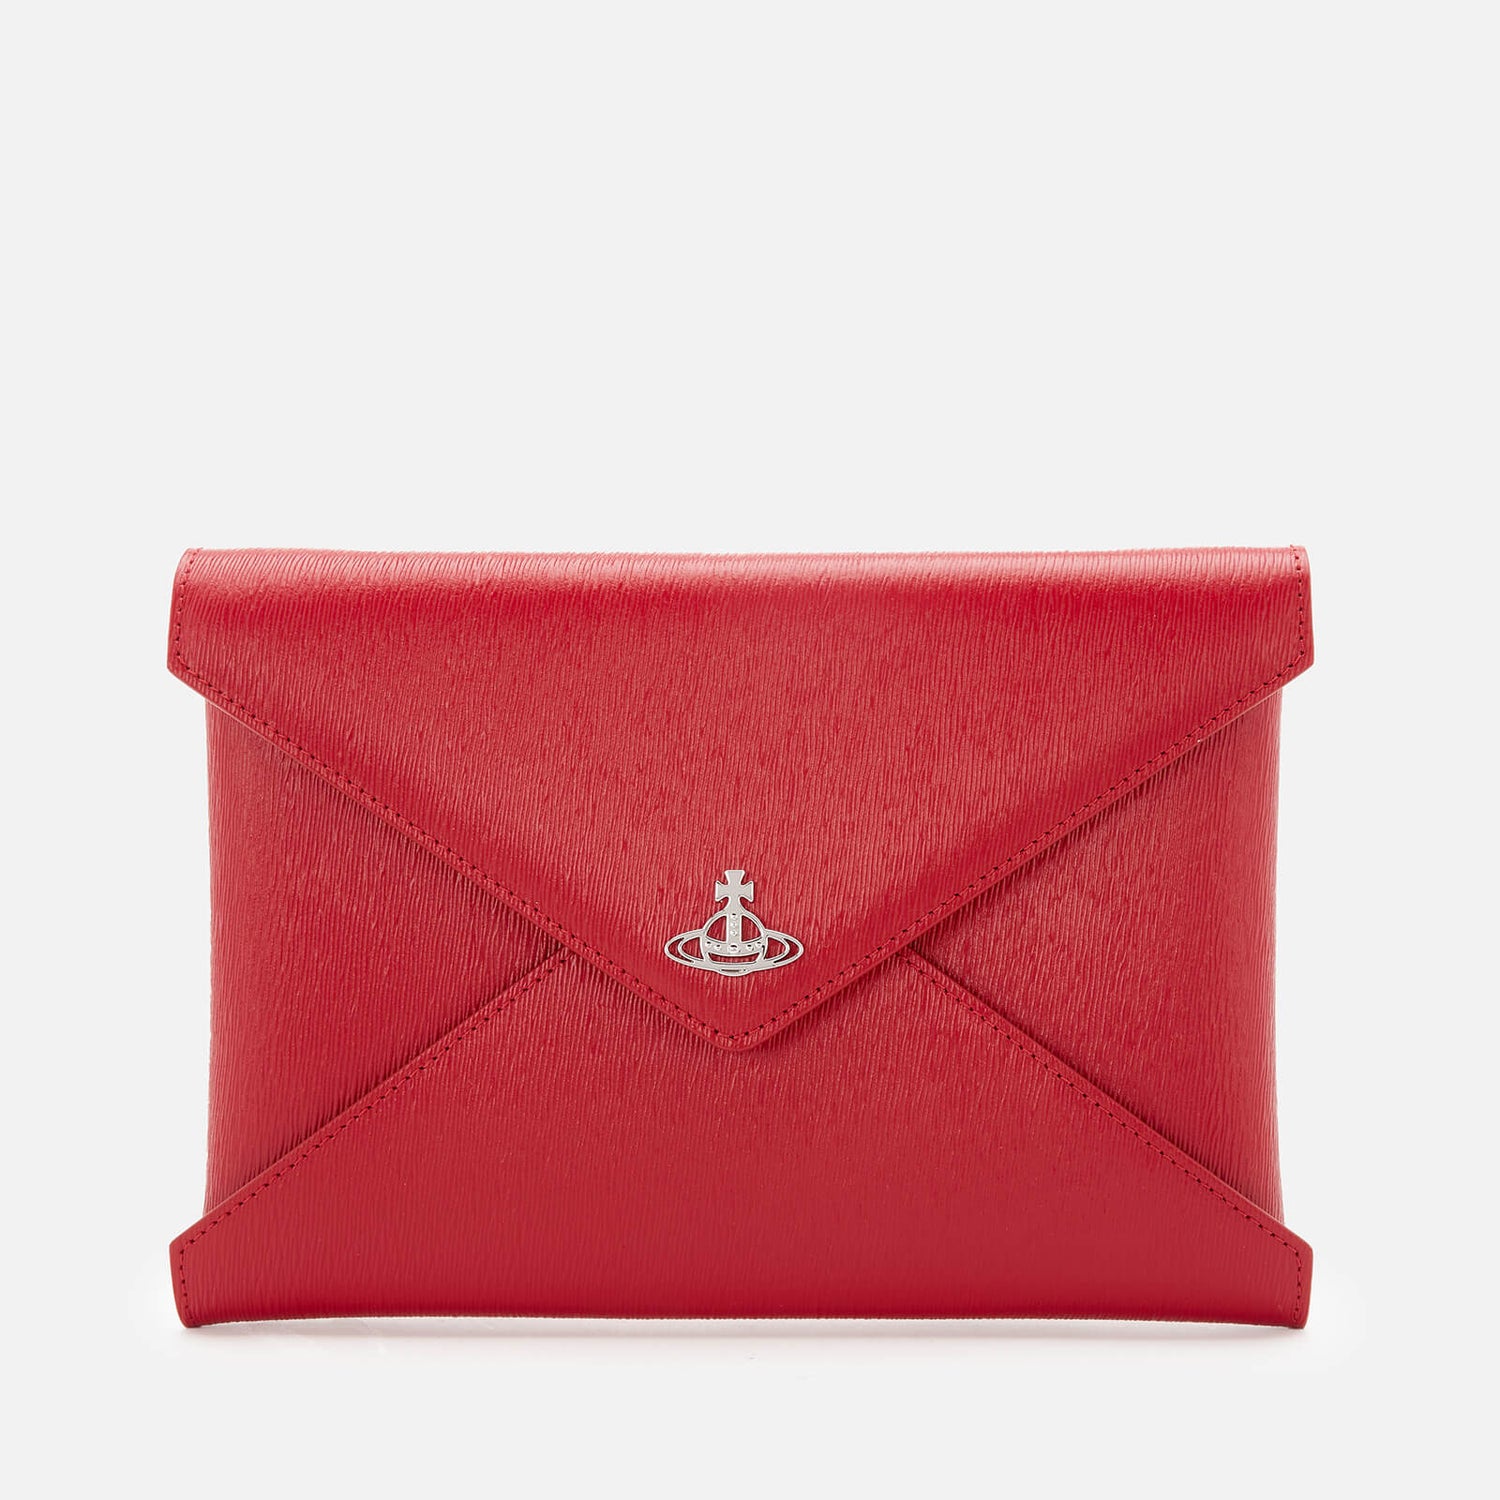 Vivienne Westwood Women's Bella Pouch Bag - Red